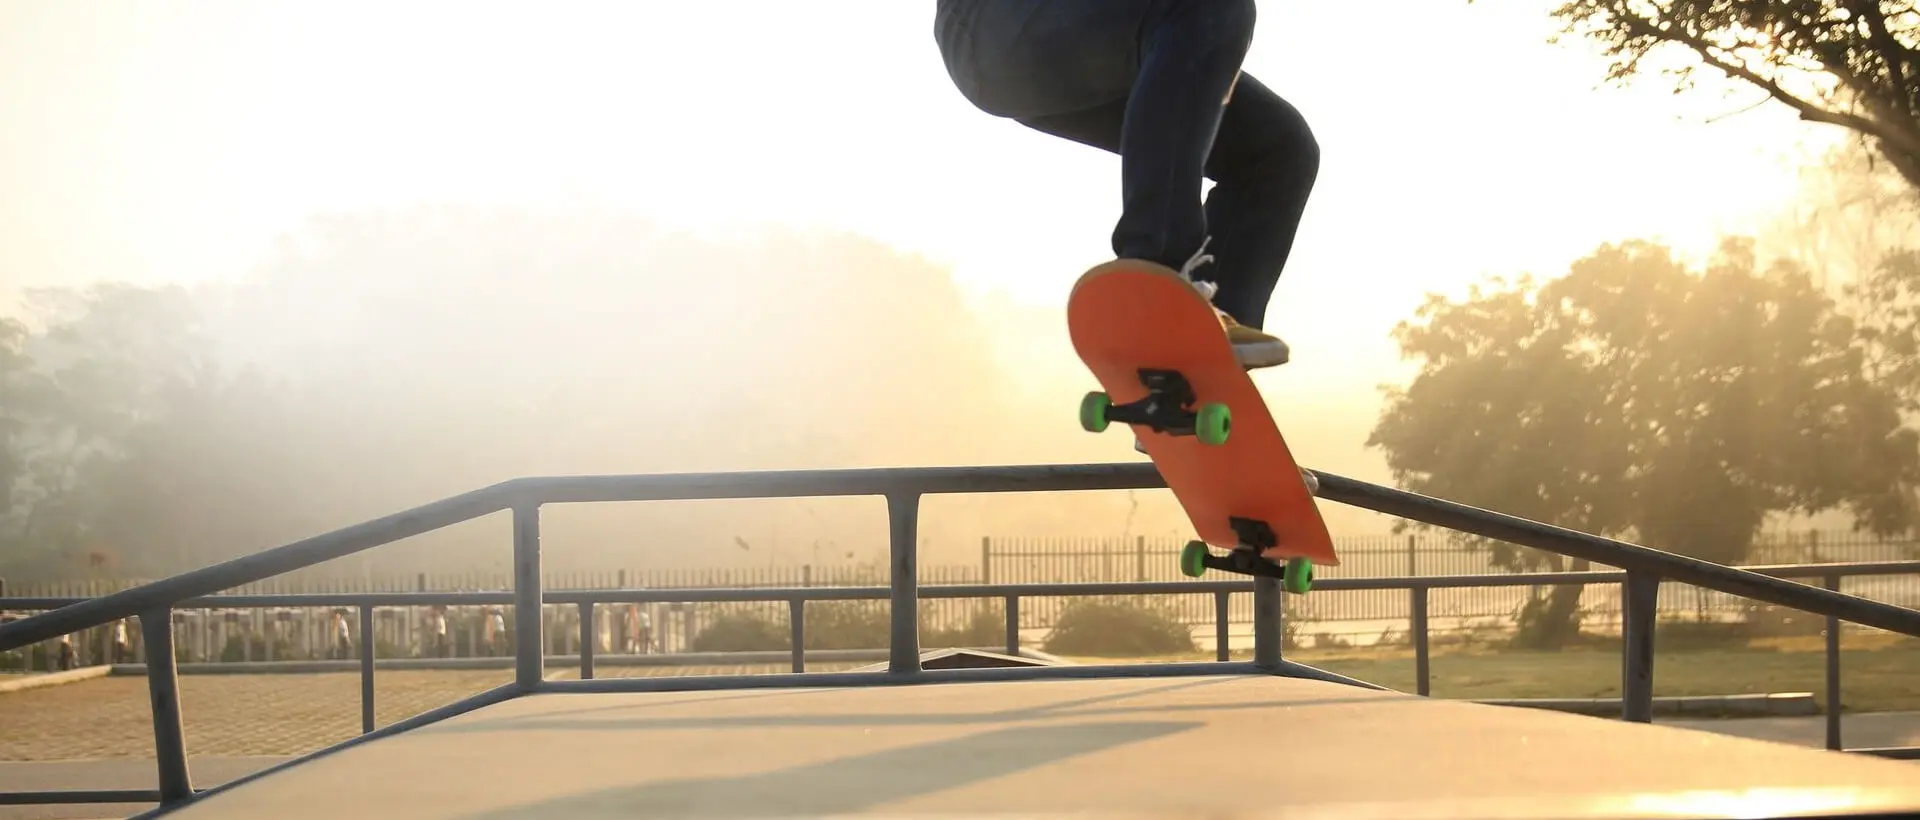 A person on a skateboard doing an air trick.